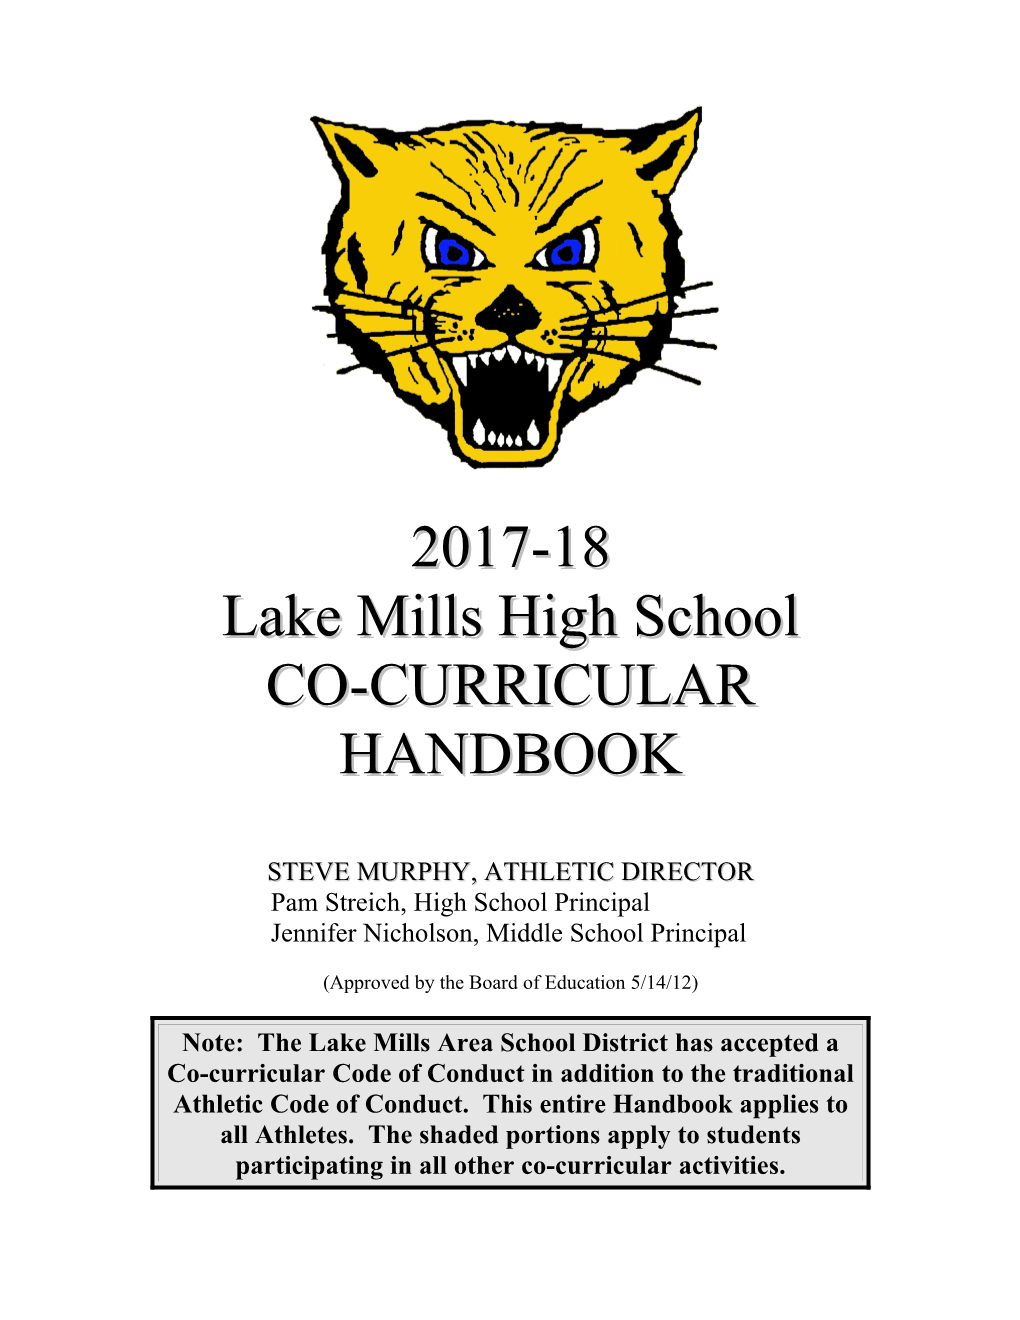 Lake Mills High School